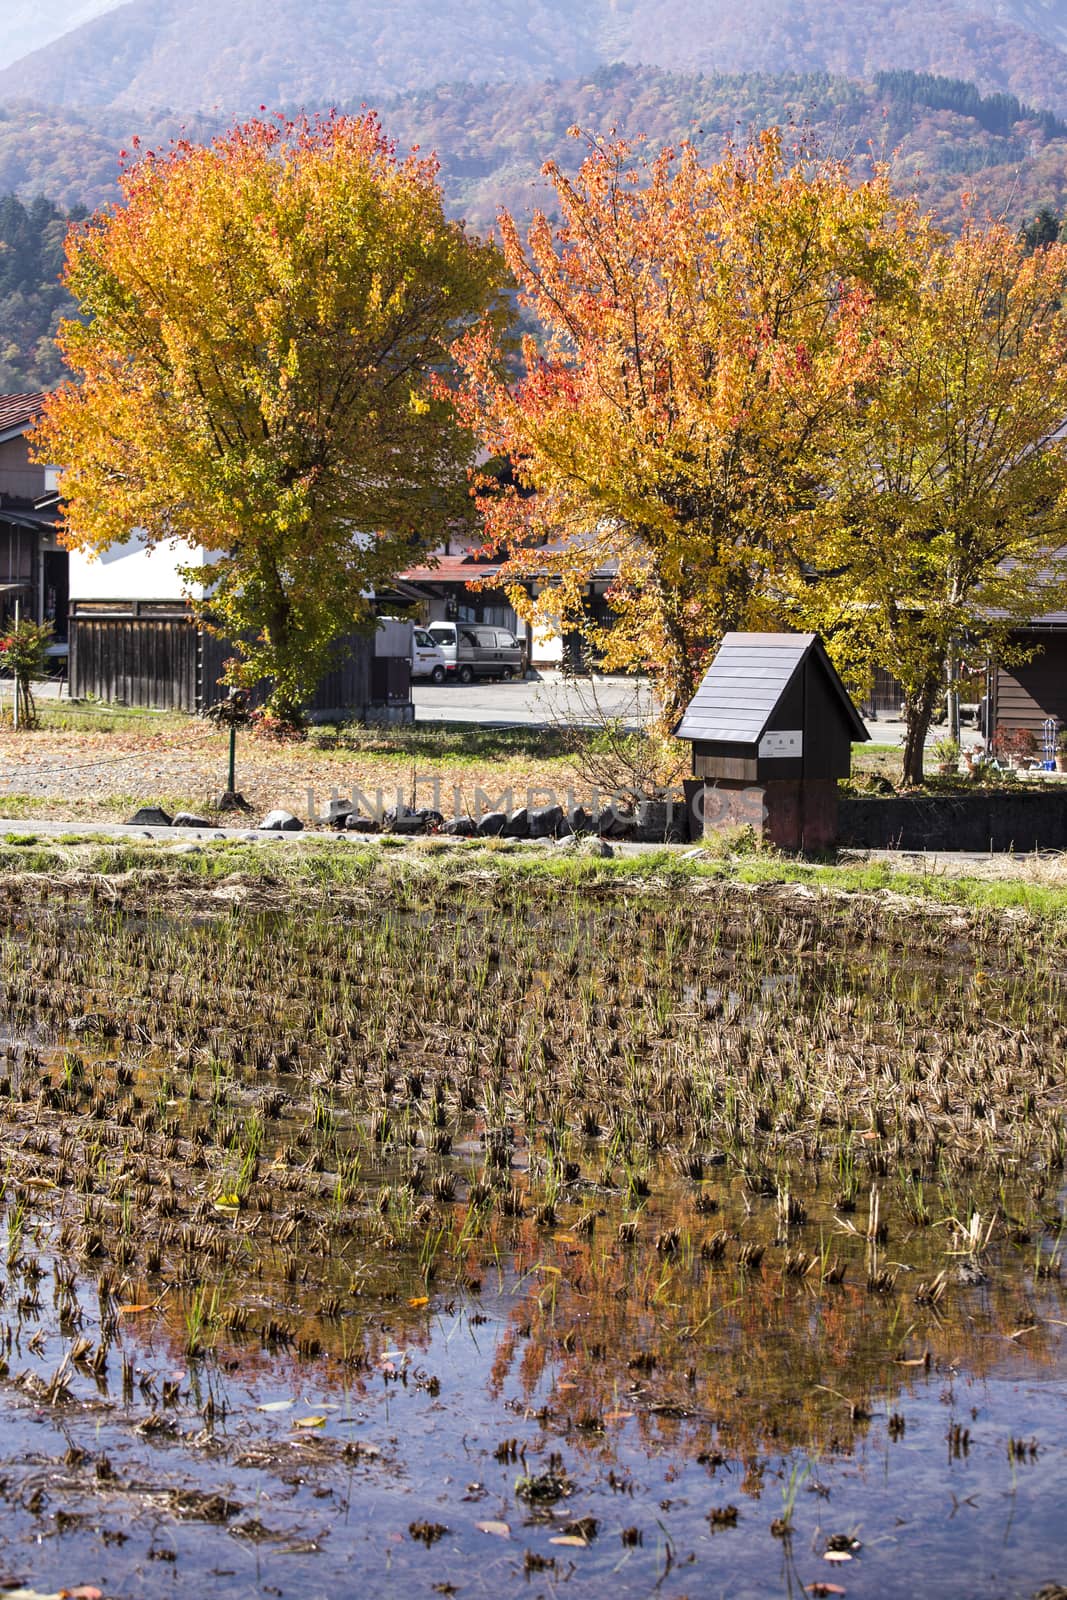 Cottage and rice field in small village shirakawa-go japan. autumn season